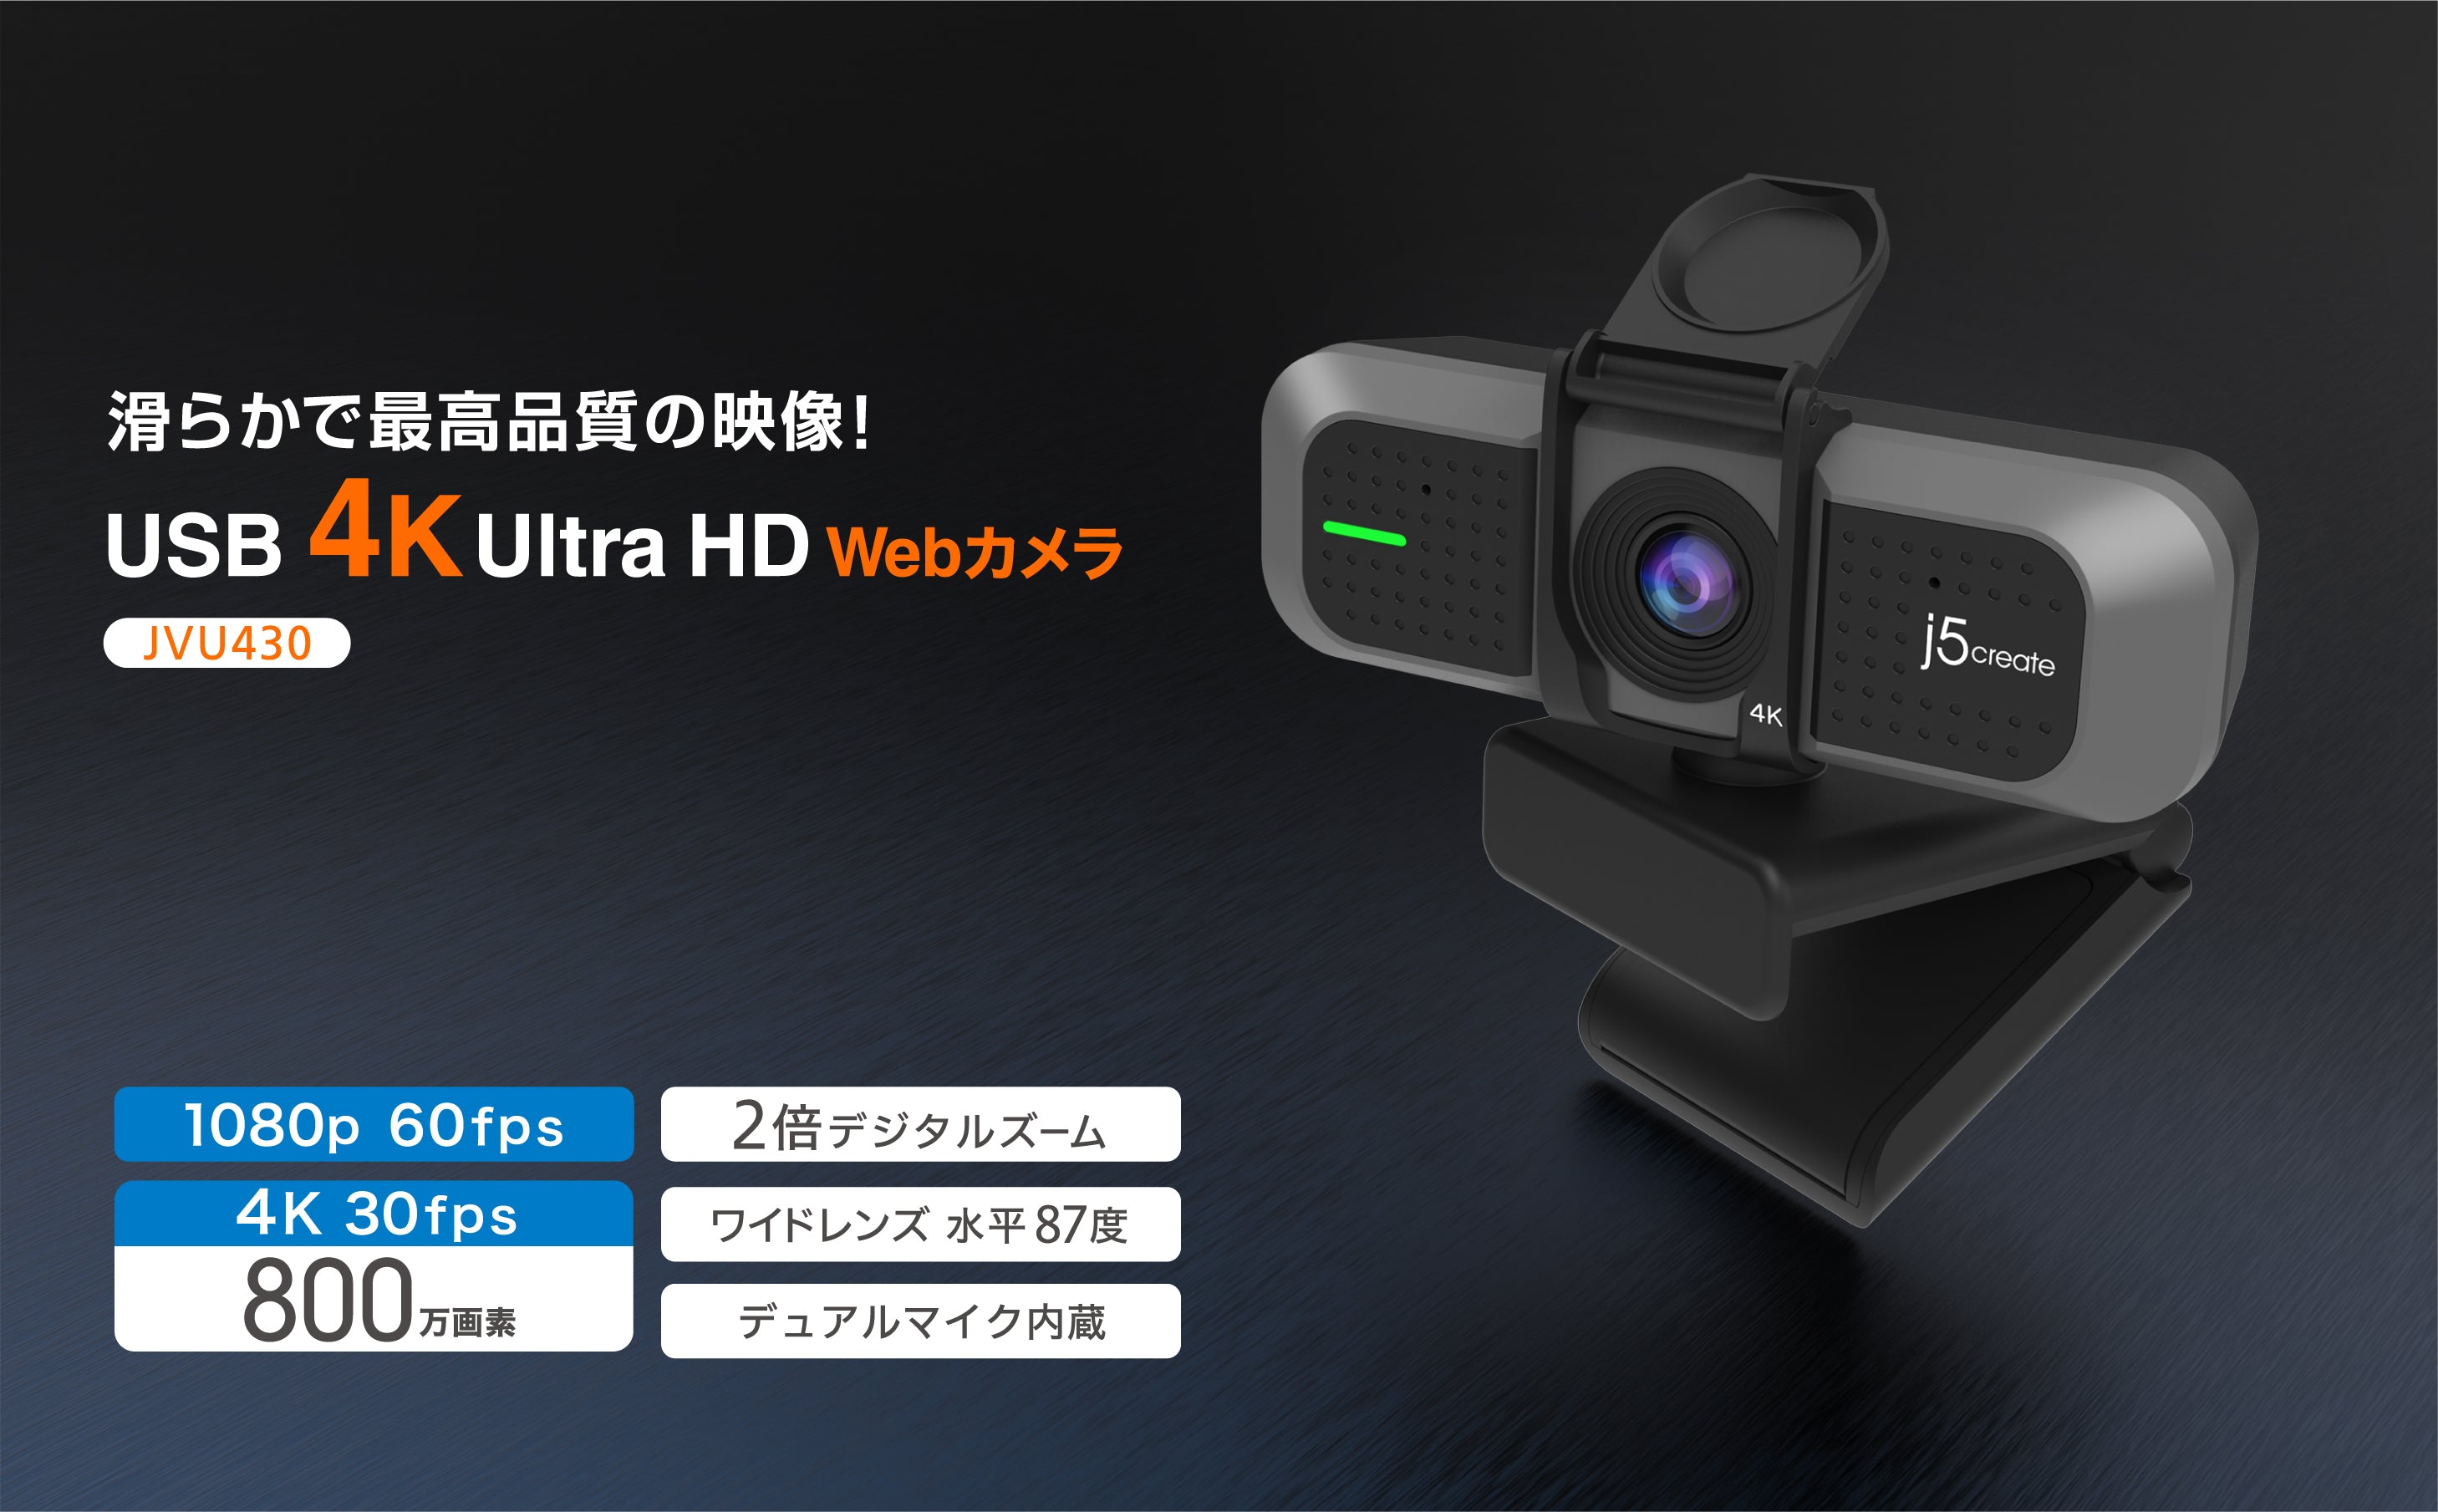 J5create は2 倍ズーム搭載 4k 高画質対応 Usb 4k Ultra Hd Web カメラ Jvu430 を 9 月10 日に New Jp J5create